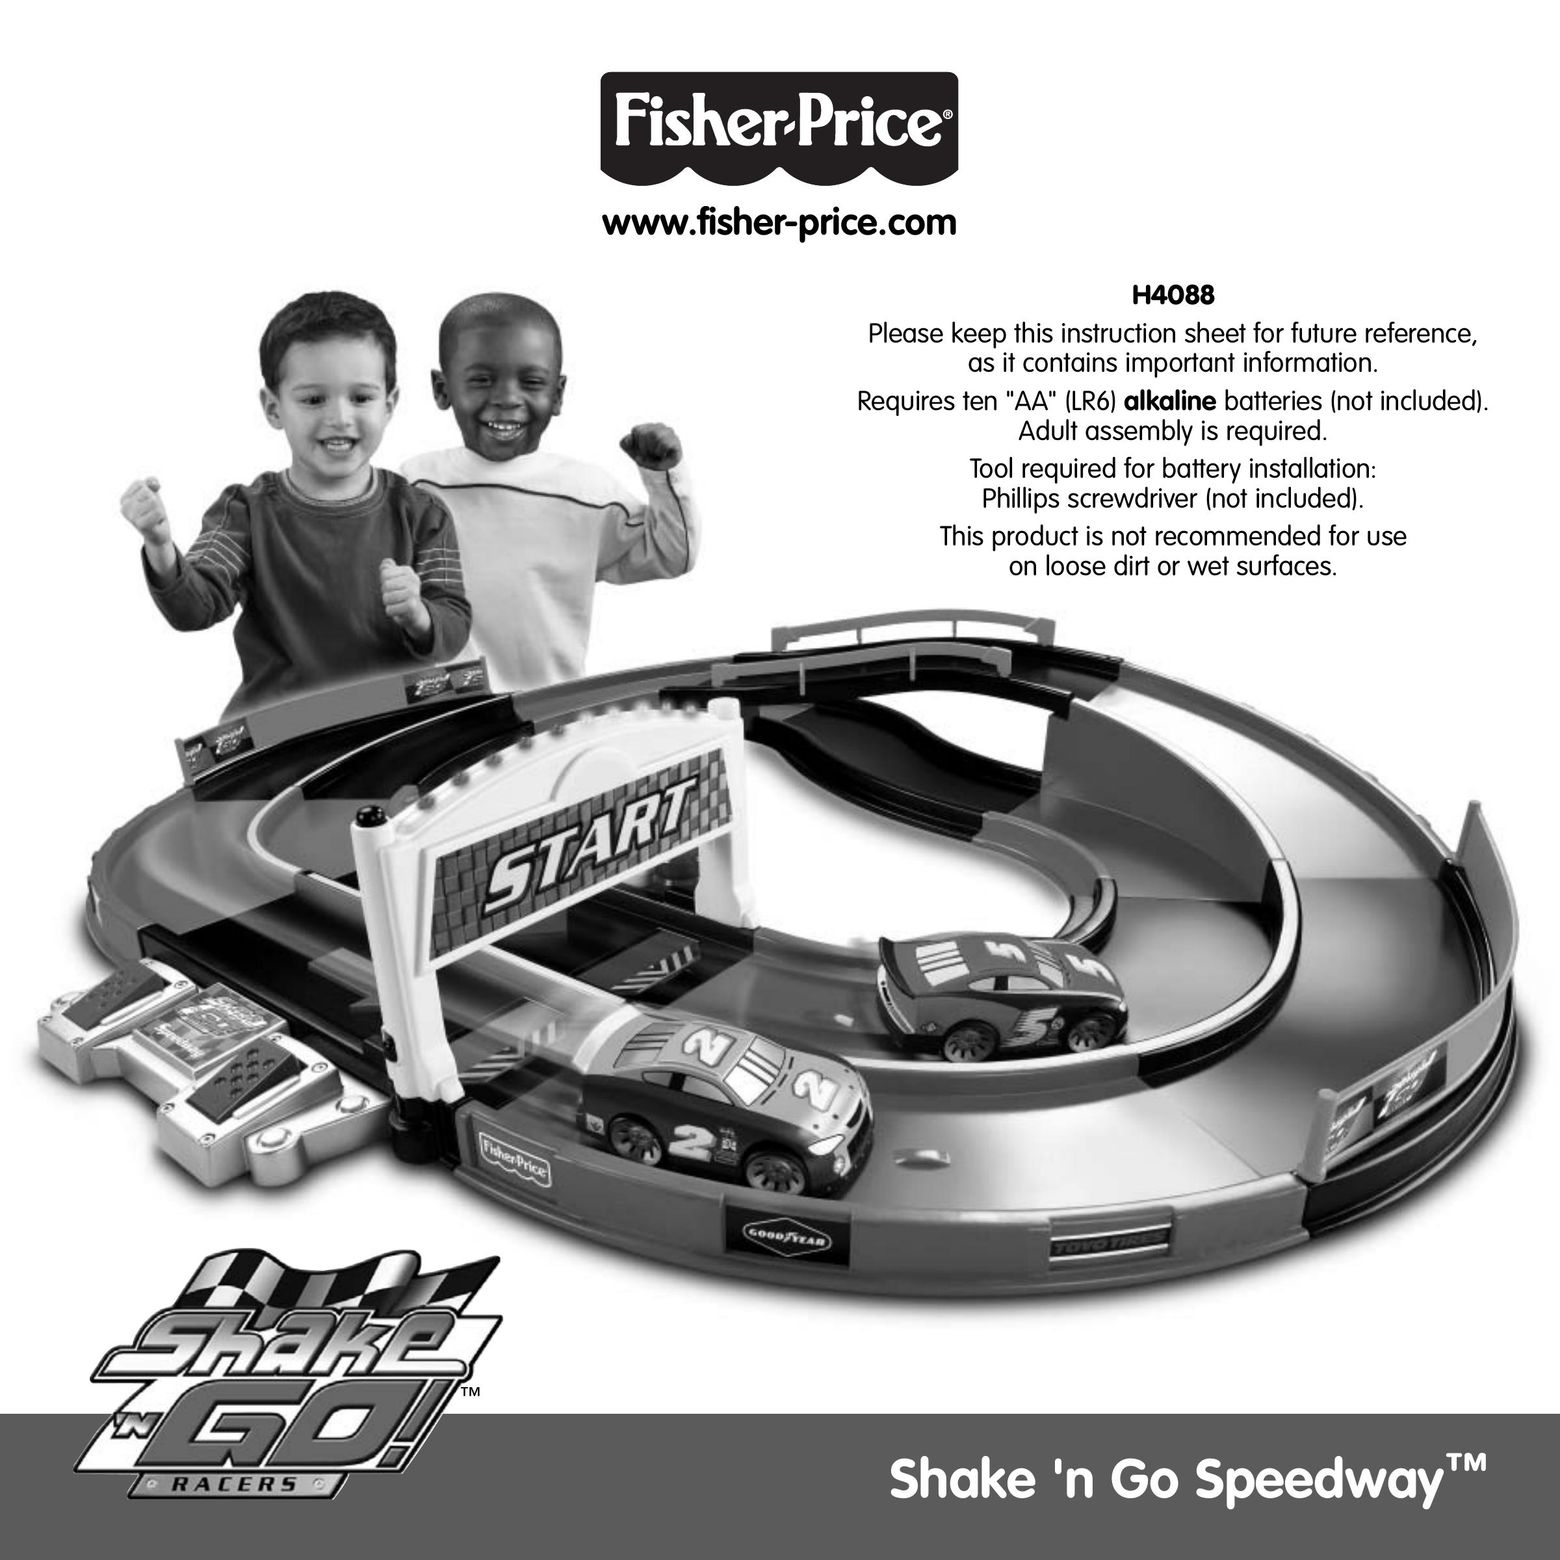 Fisher-Price H4088 Riding Toy User Manual